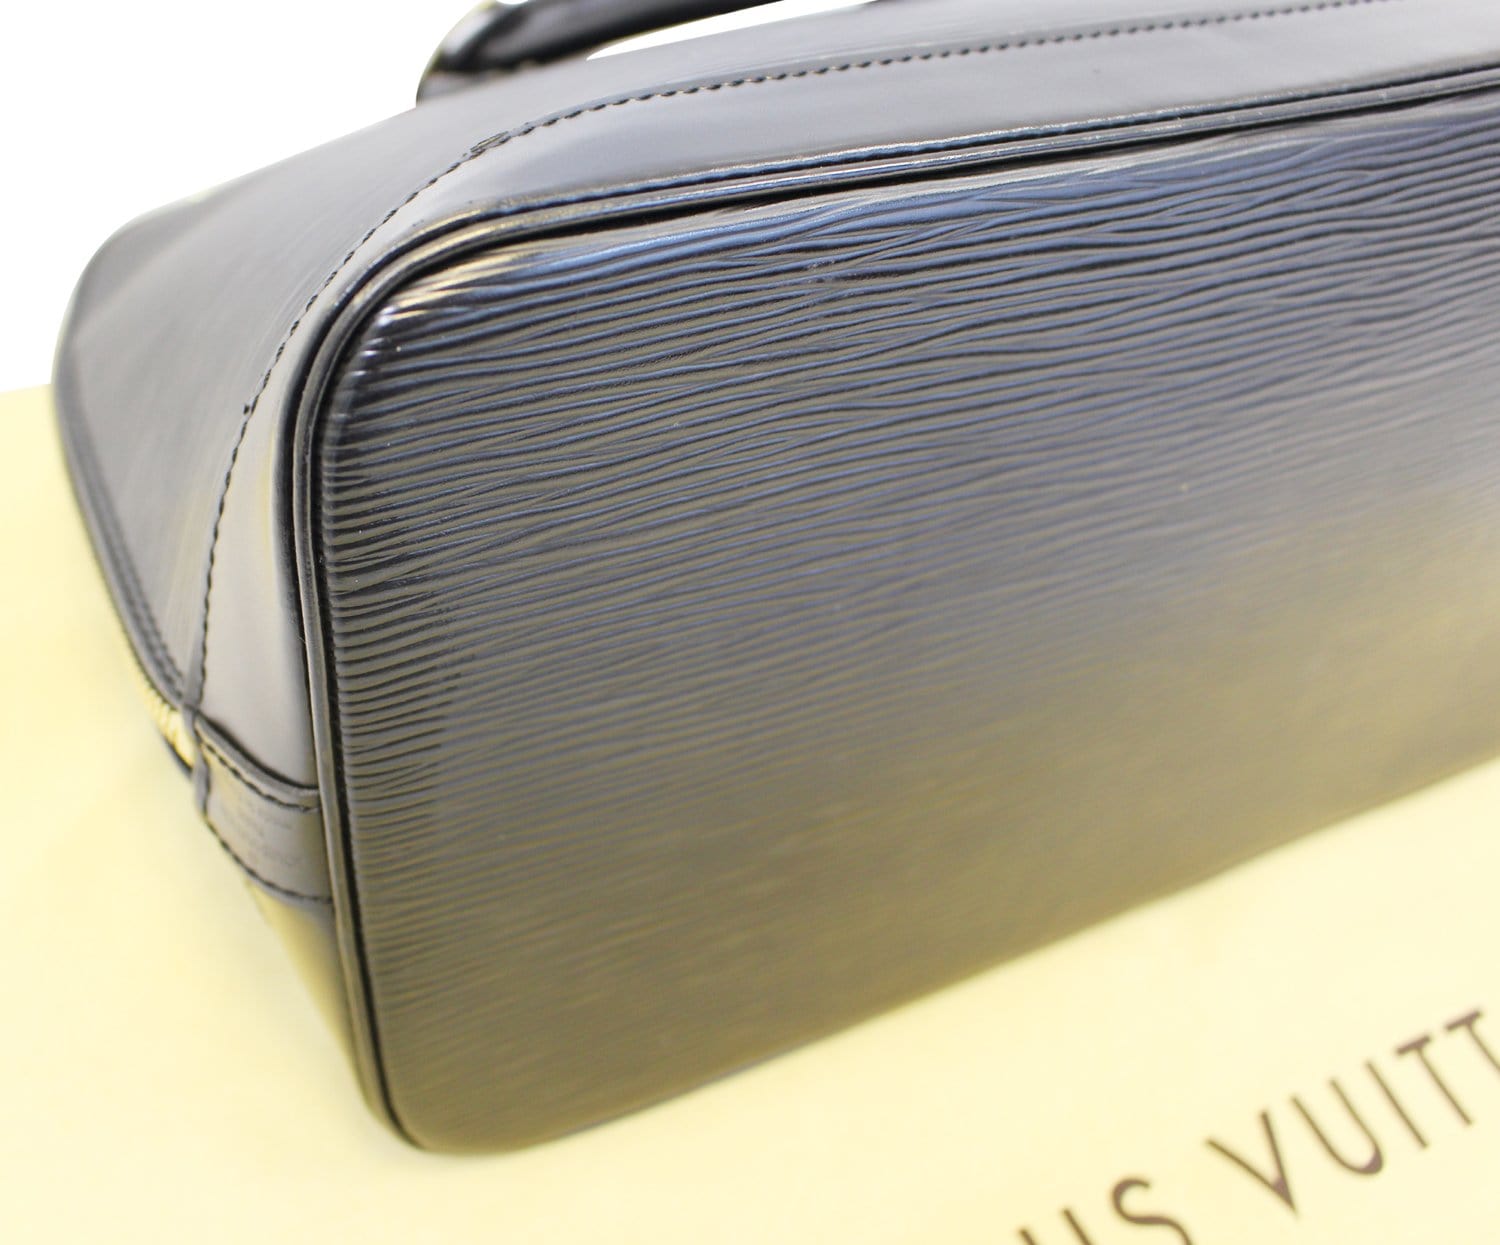 Louis Vuitton Black Epi Leather Alma MM Bag – Bagaholic